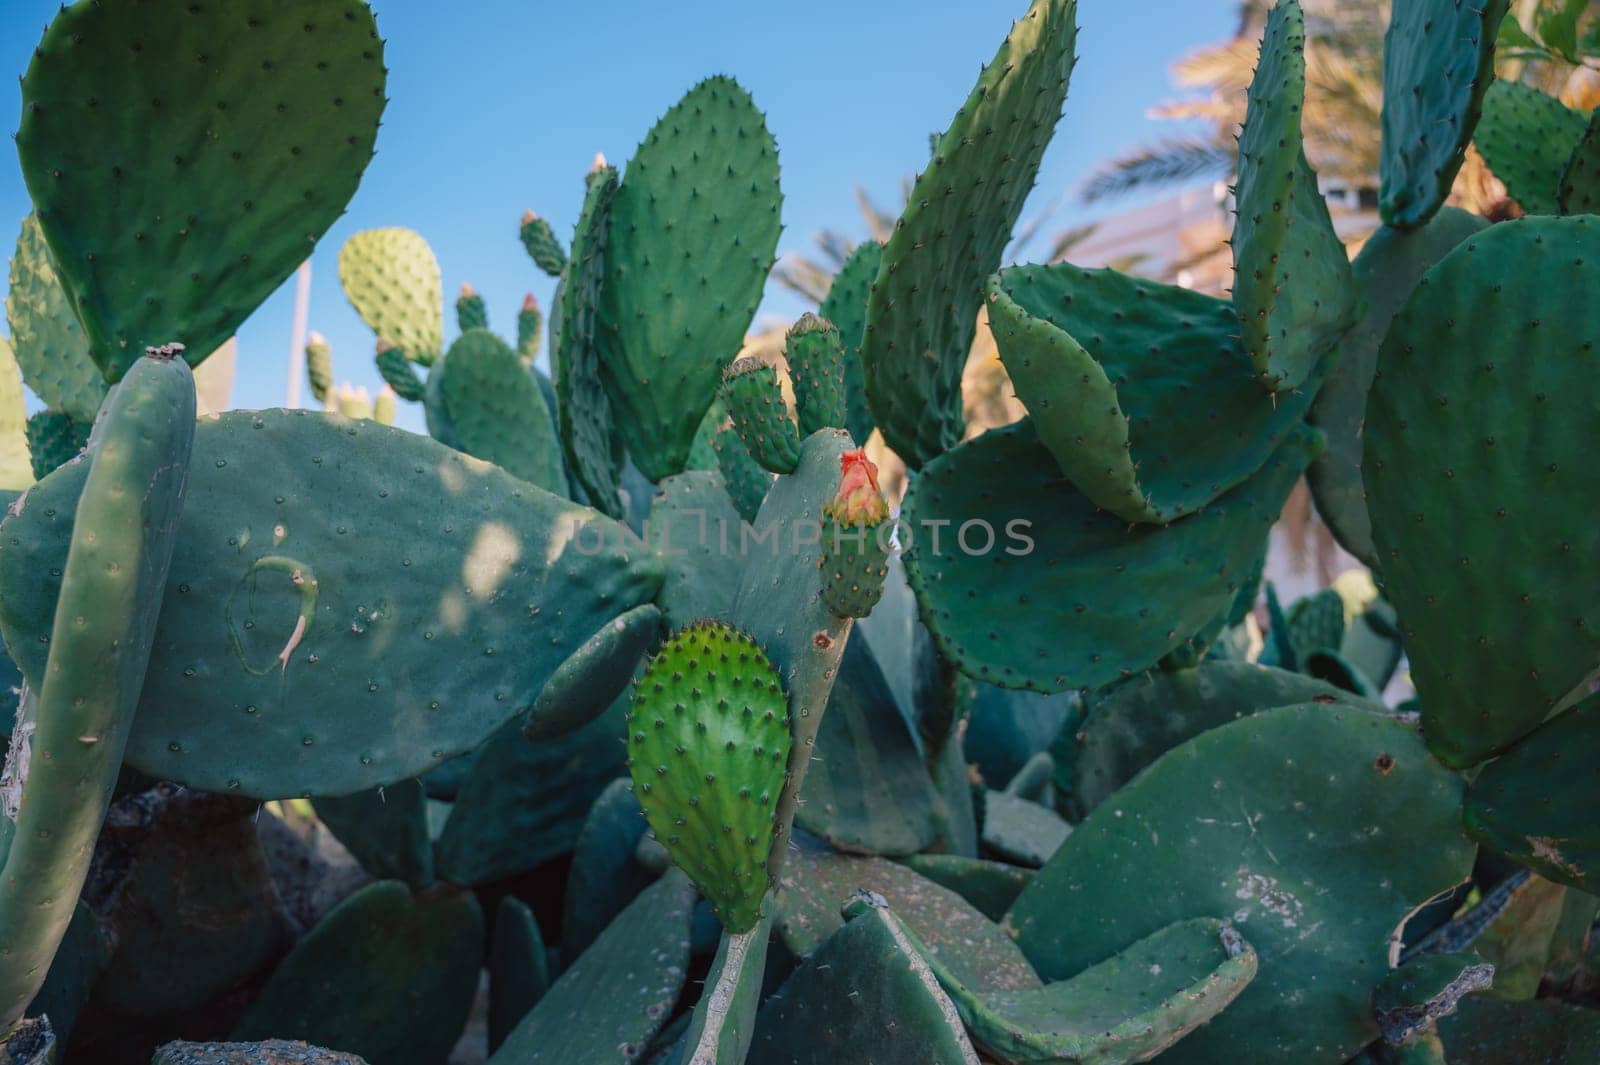 Big cactus bush by rusak